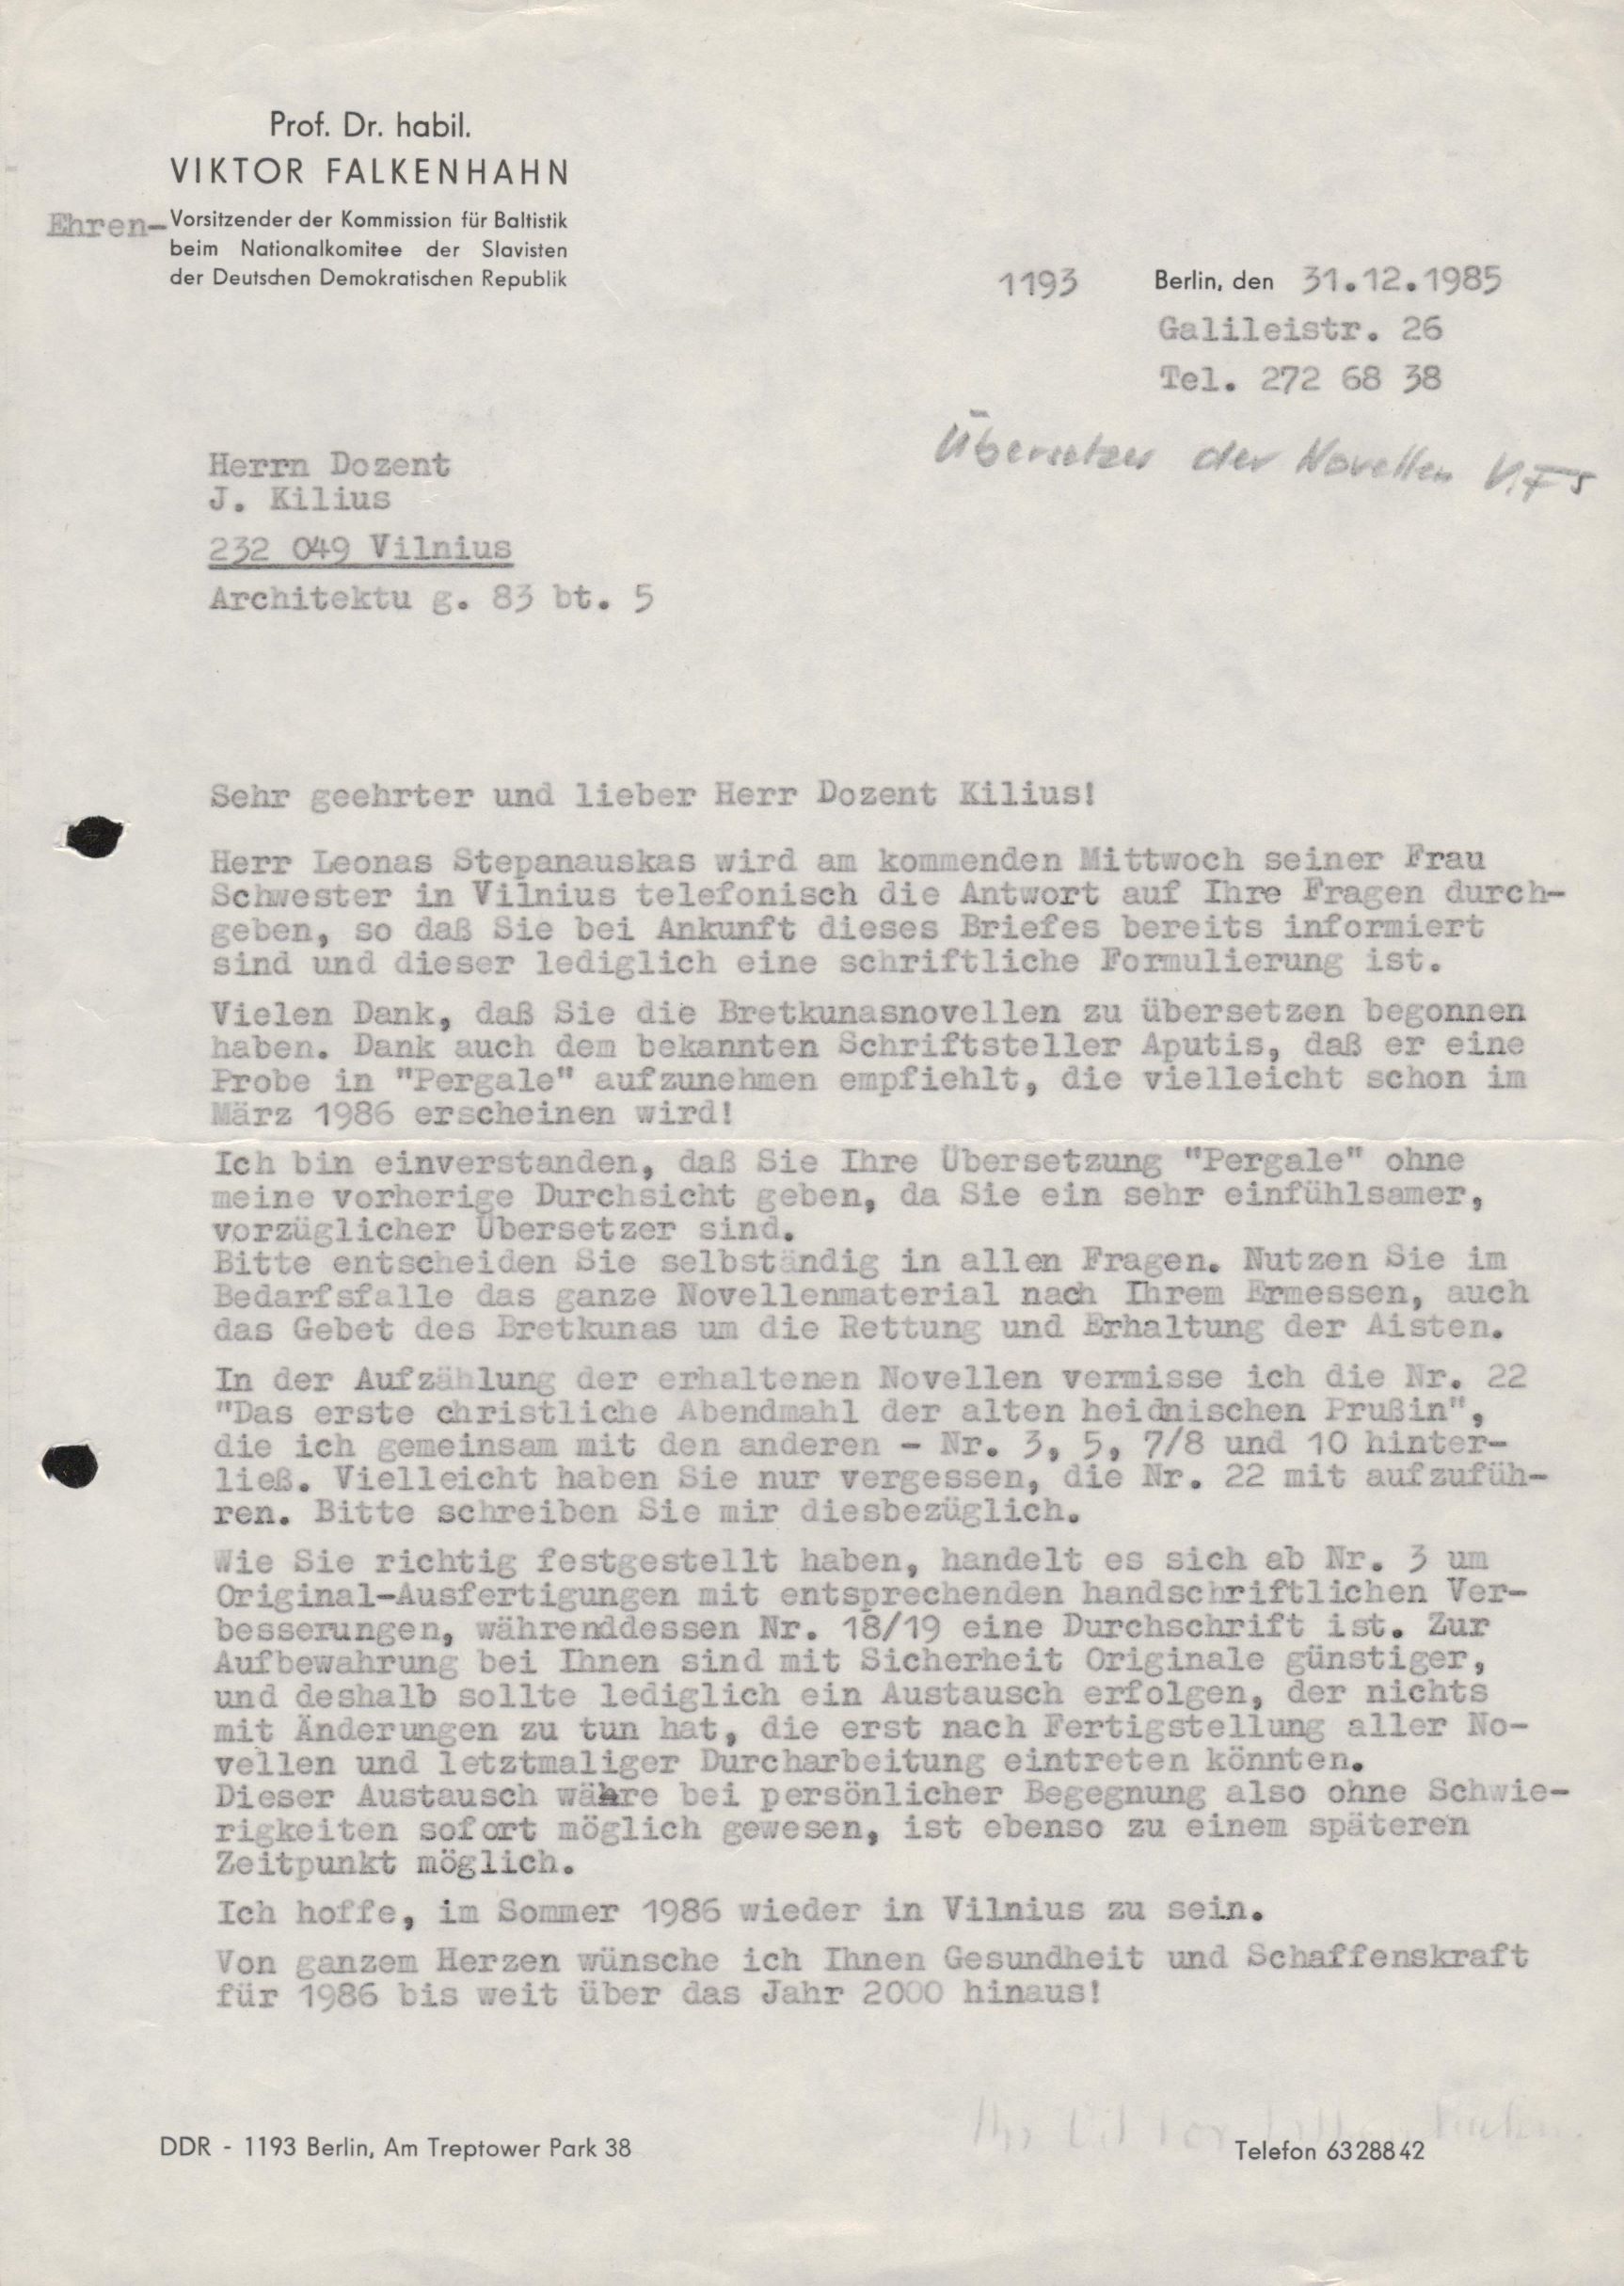 V. Falkenhano laiškas vokiečių k. J. Kiliui. Berlynas, 1985.12.31. MLLM P26400